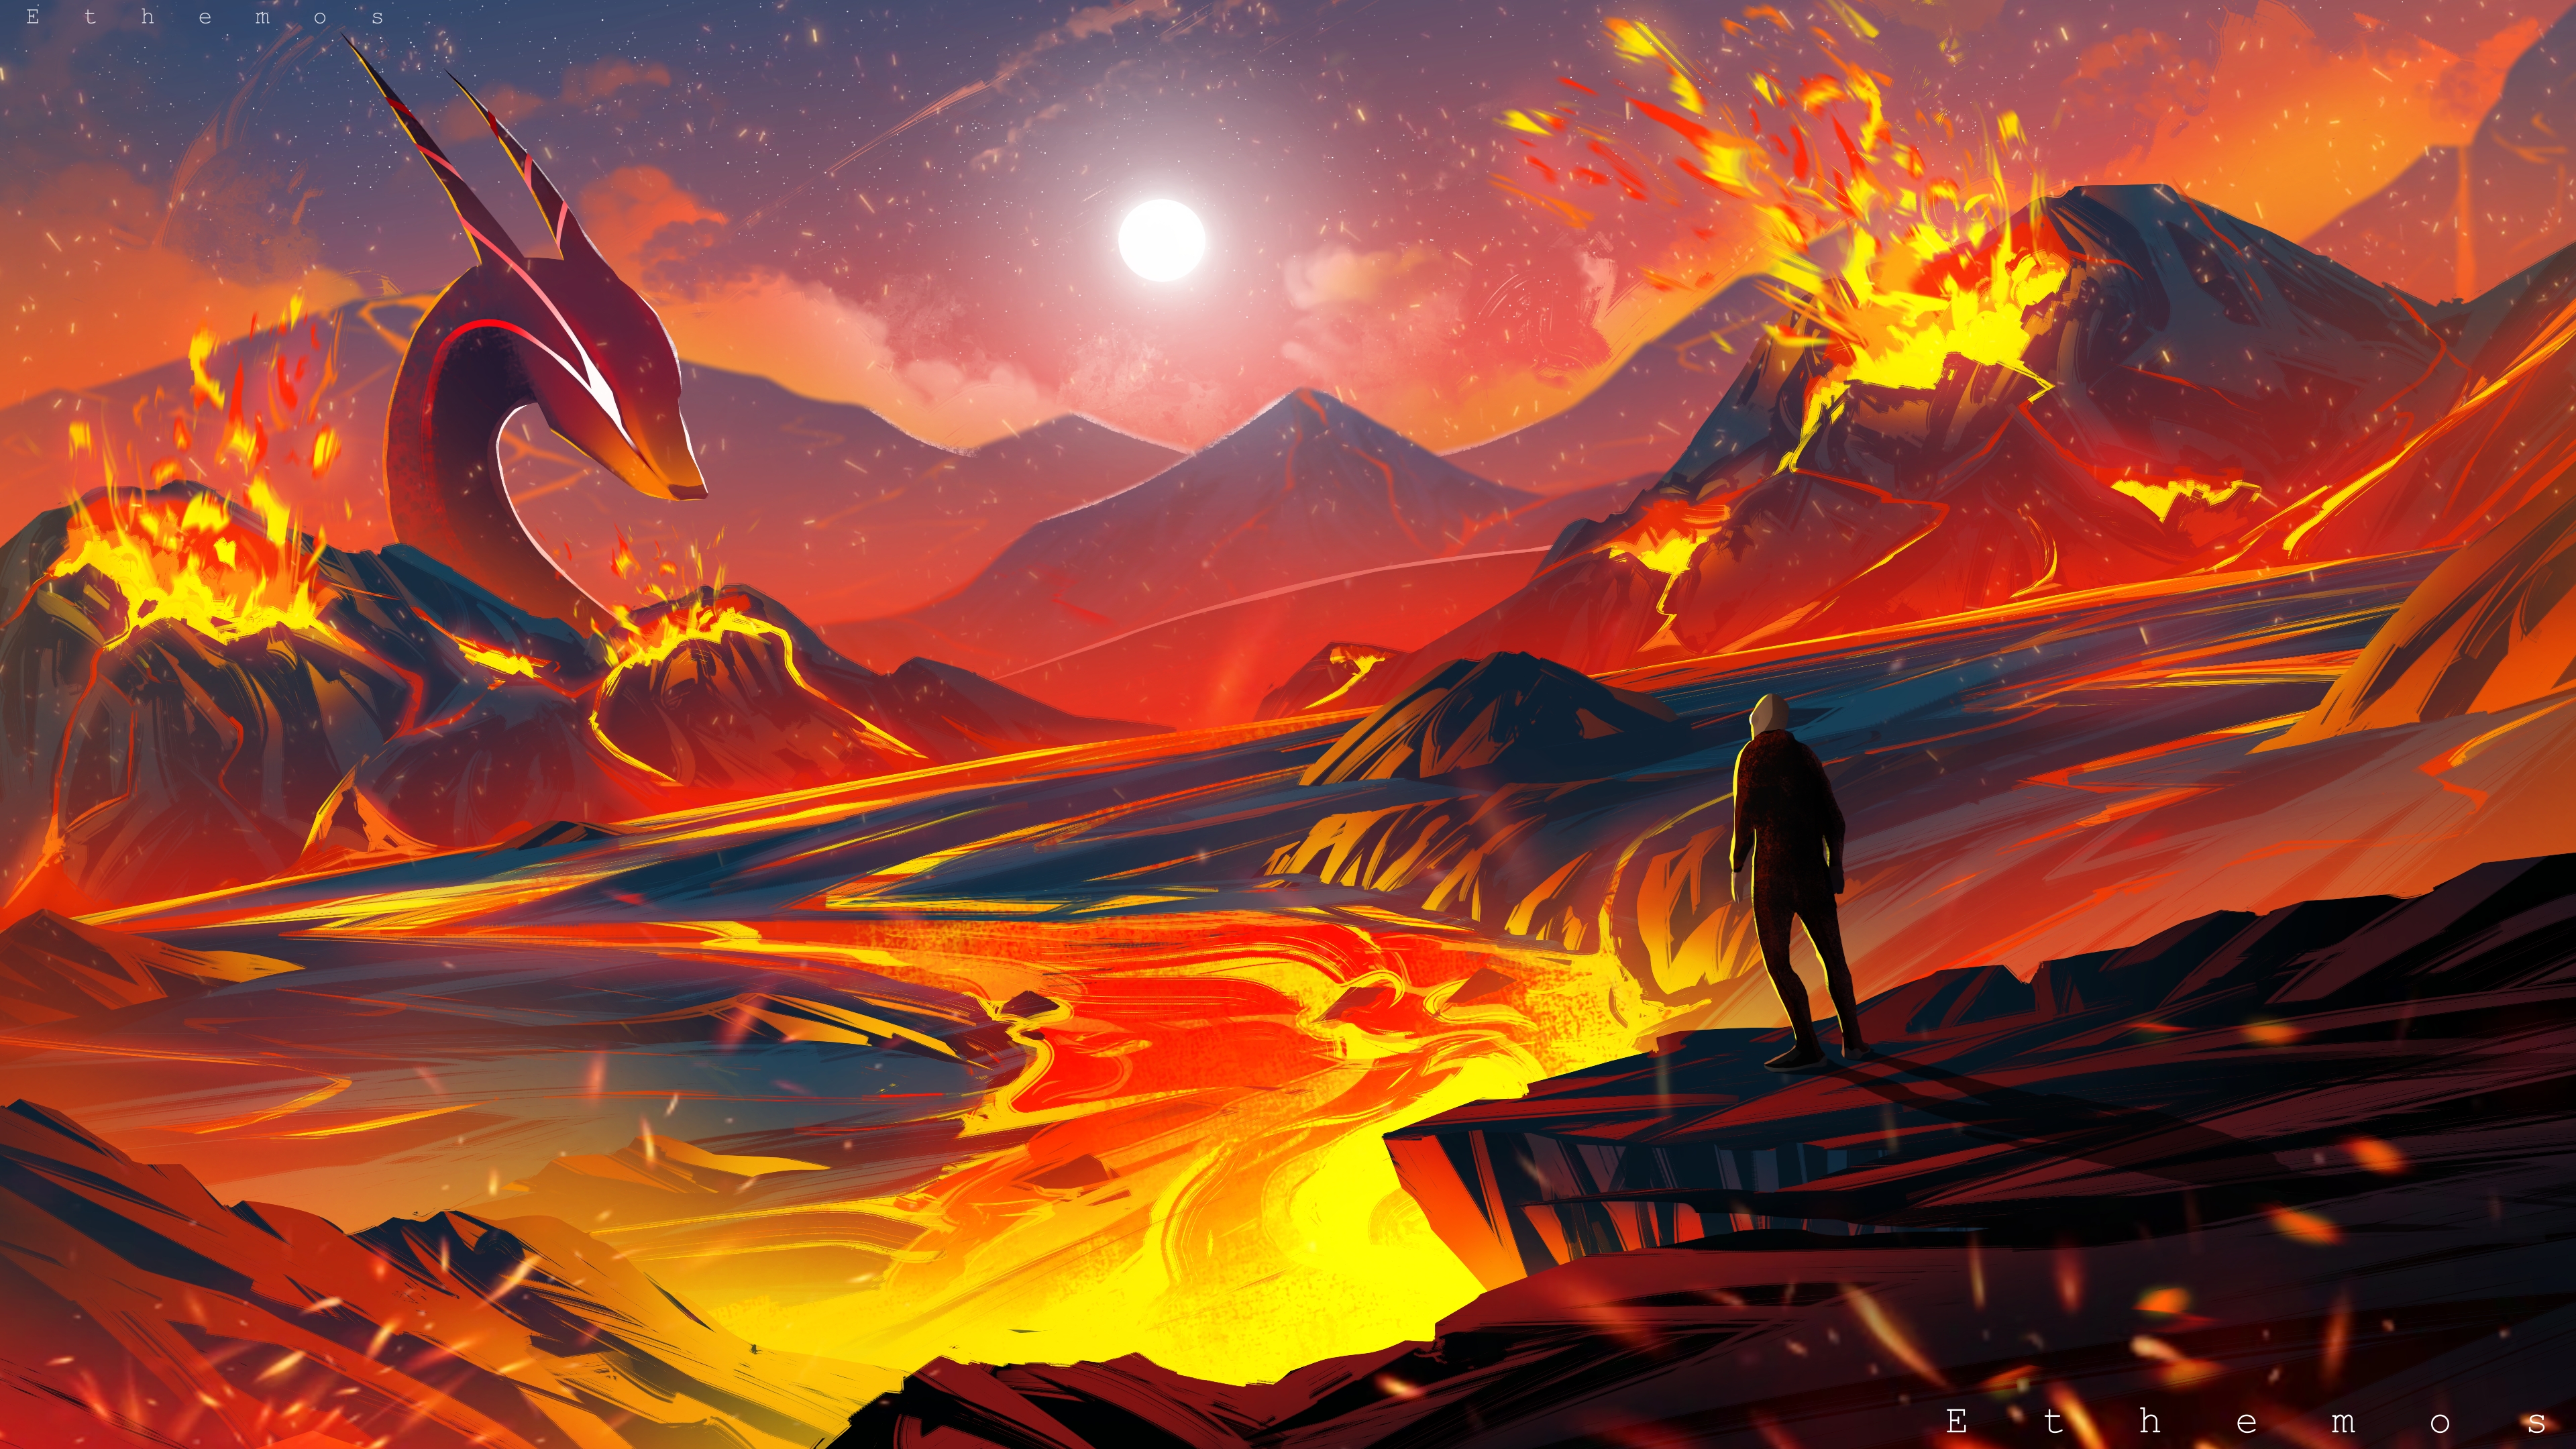 Digital Art Artwork Illustration Landscape Fantasy Art Lava Night Moon Vulcan Creature Mountains 3840x2160